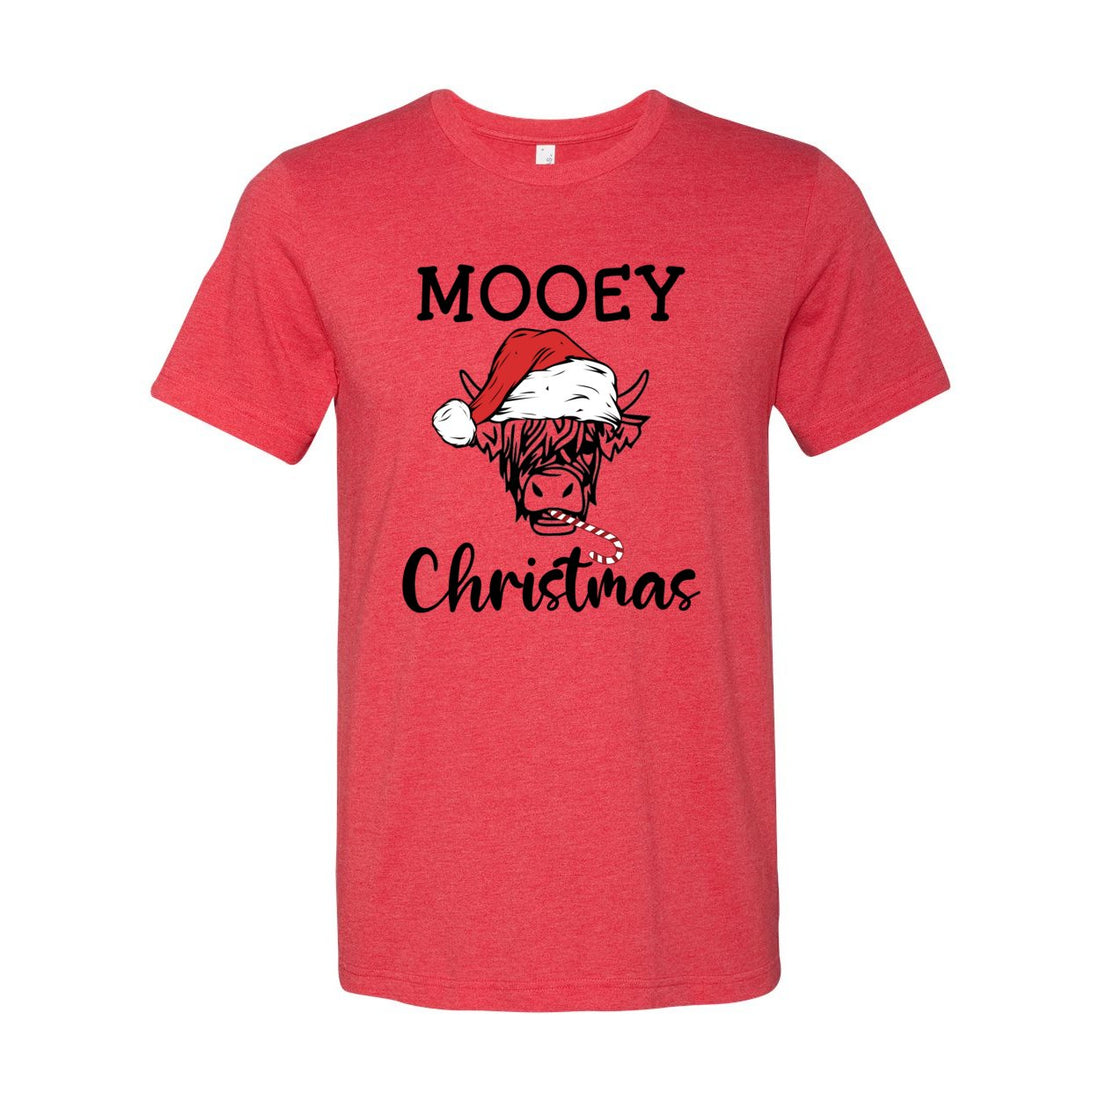 Mooey Christmas - T-Shirts - Positively Sassy - Mooey Christmas